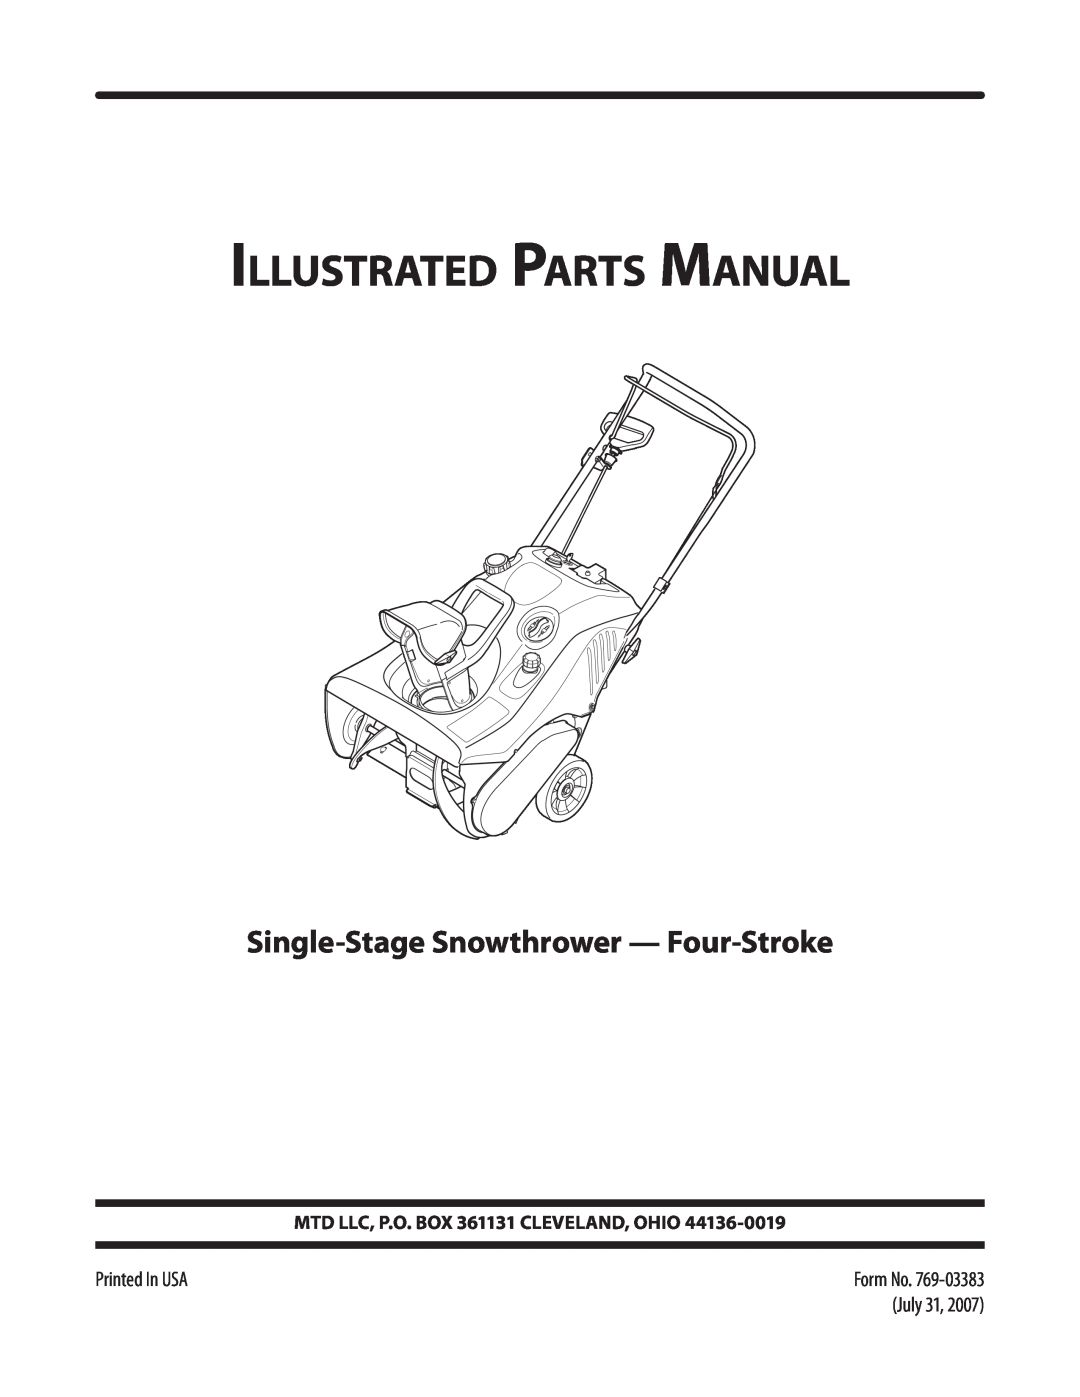 MTD manual Operator’s Manual, Single Stage Snow Thrower, Models 2B5 E2B5 & E295 